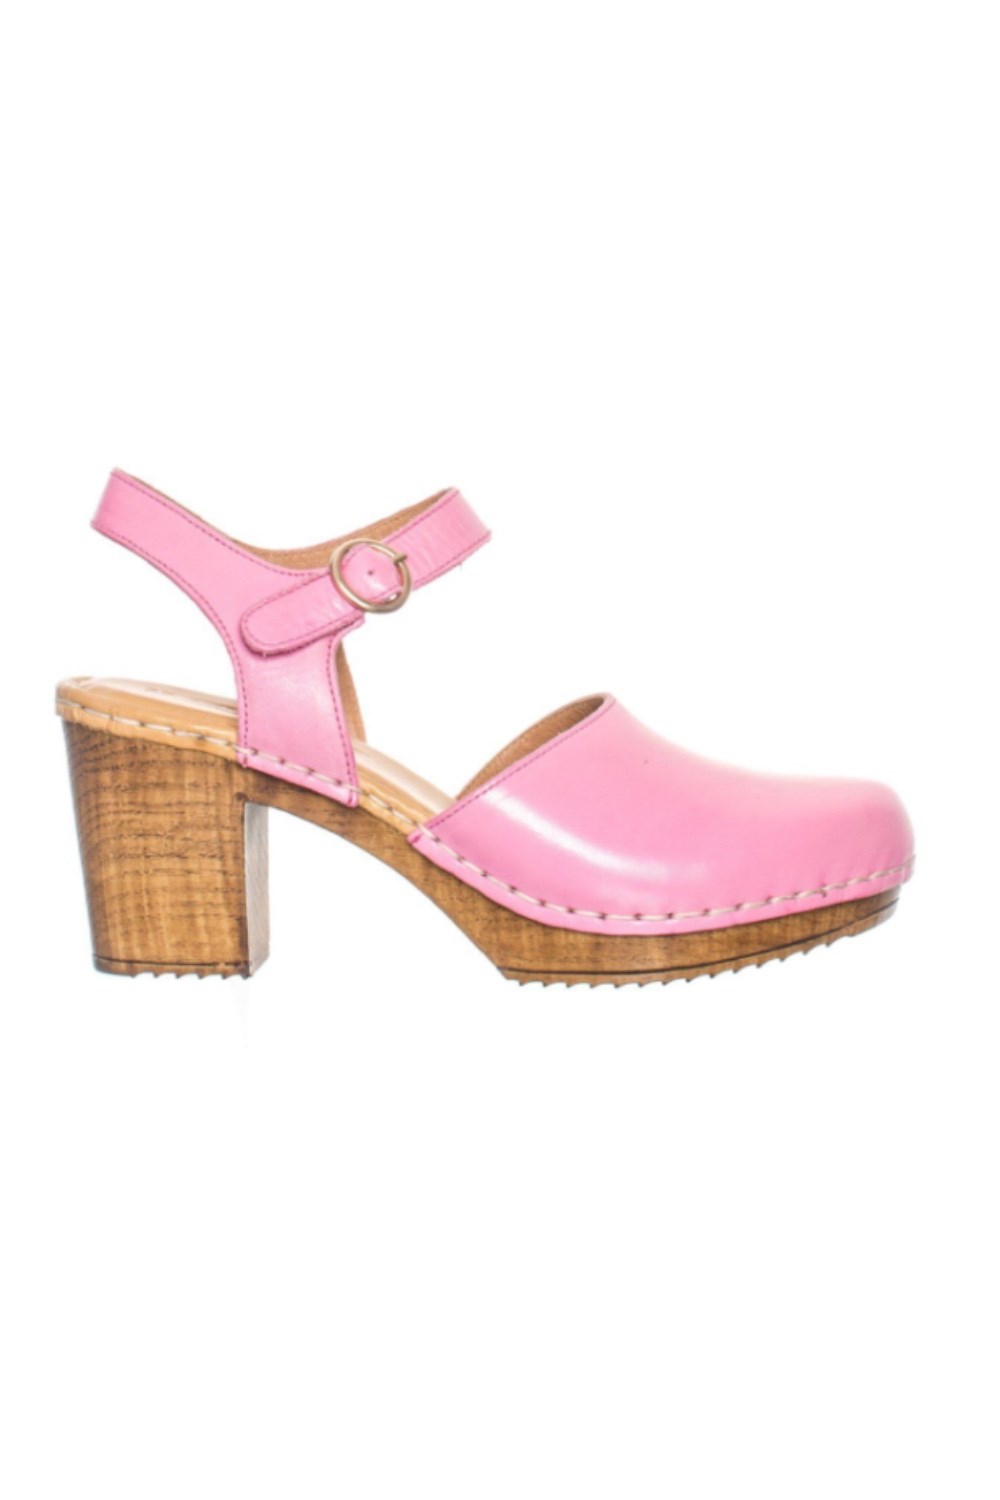 Amelia shoe pink